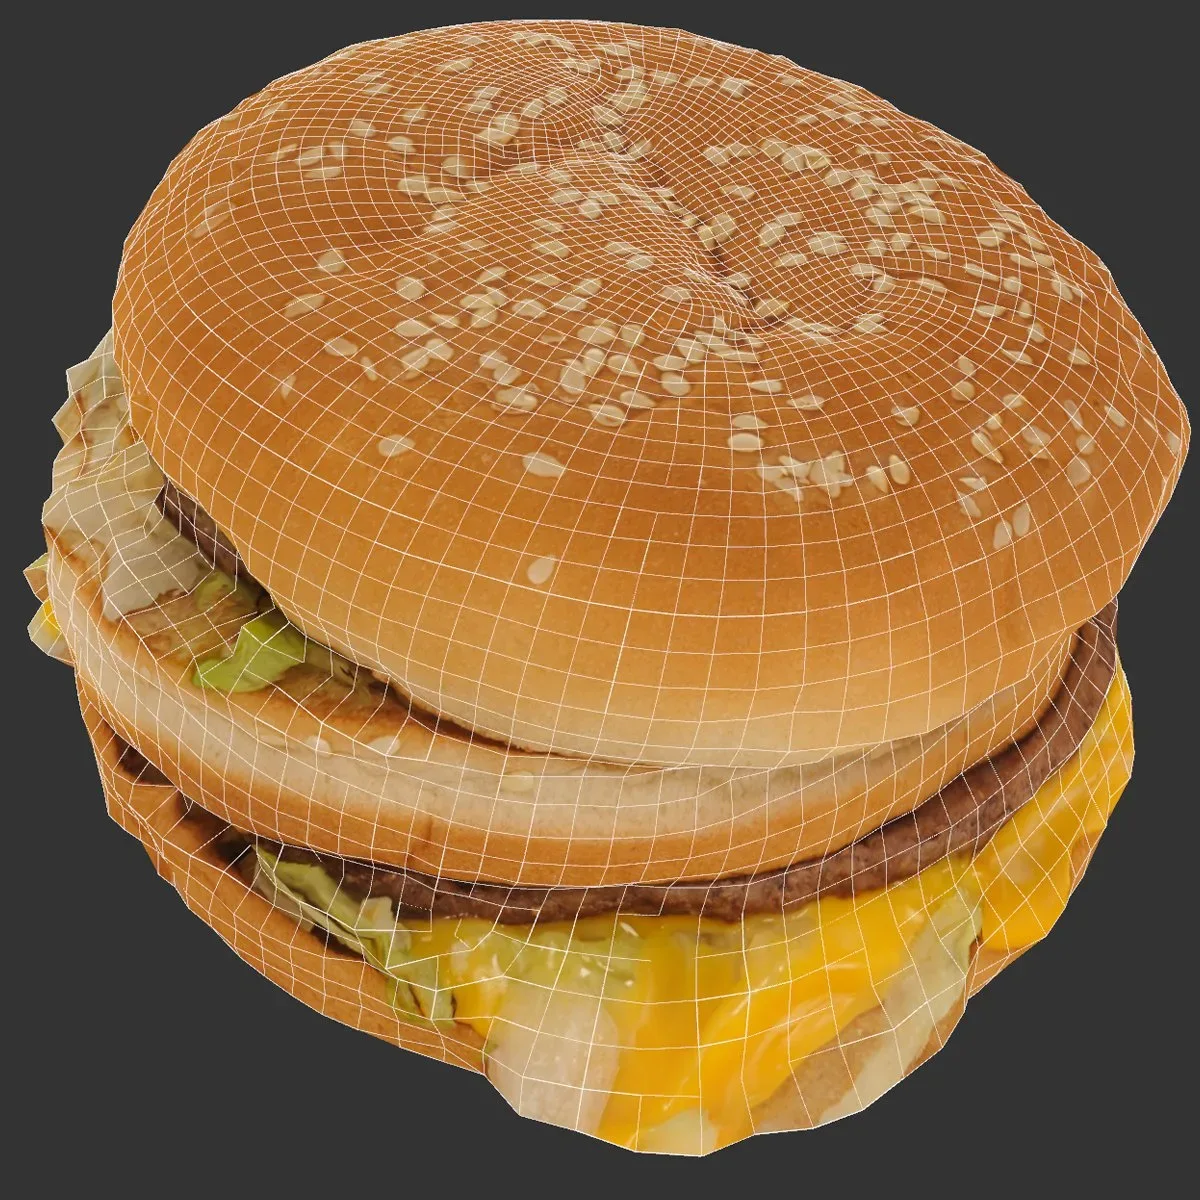 Photorealistic Hamburger 3D Model Fast Food